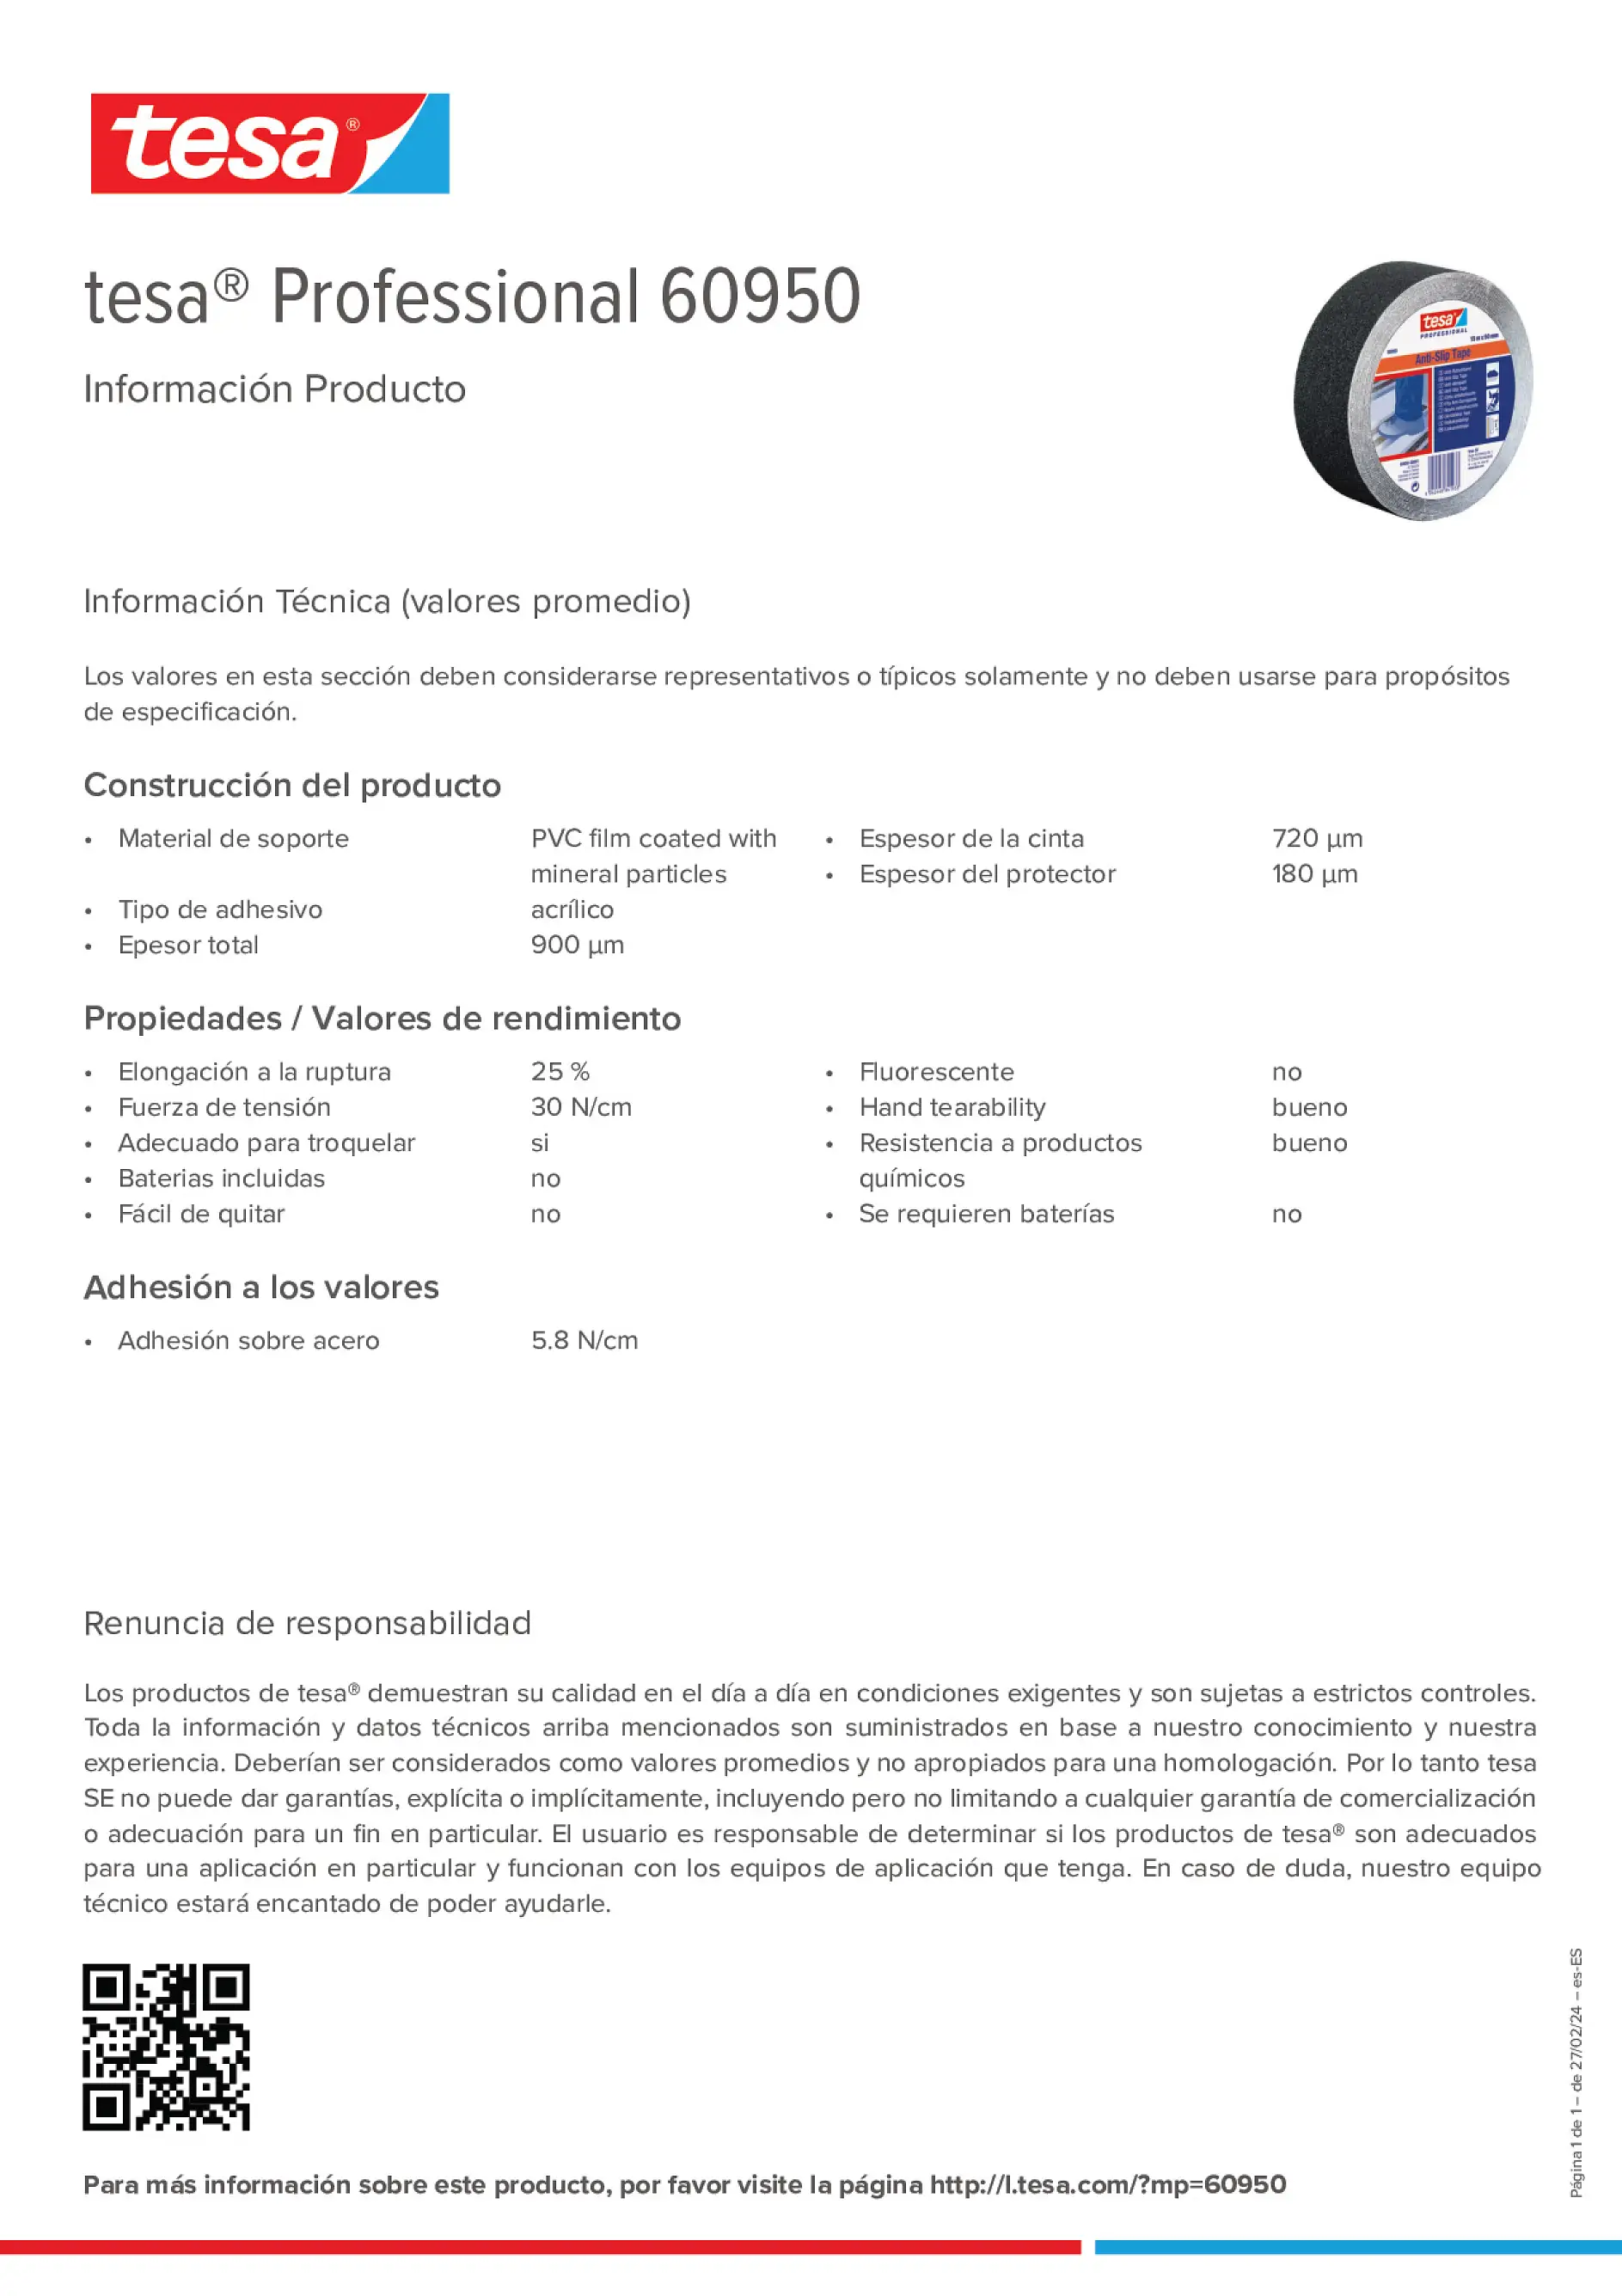 Product information_tesa® Professional 60950_es-ES